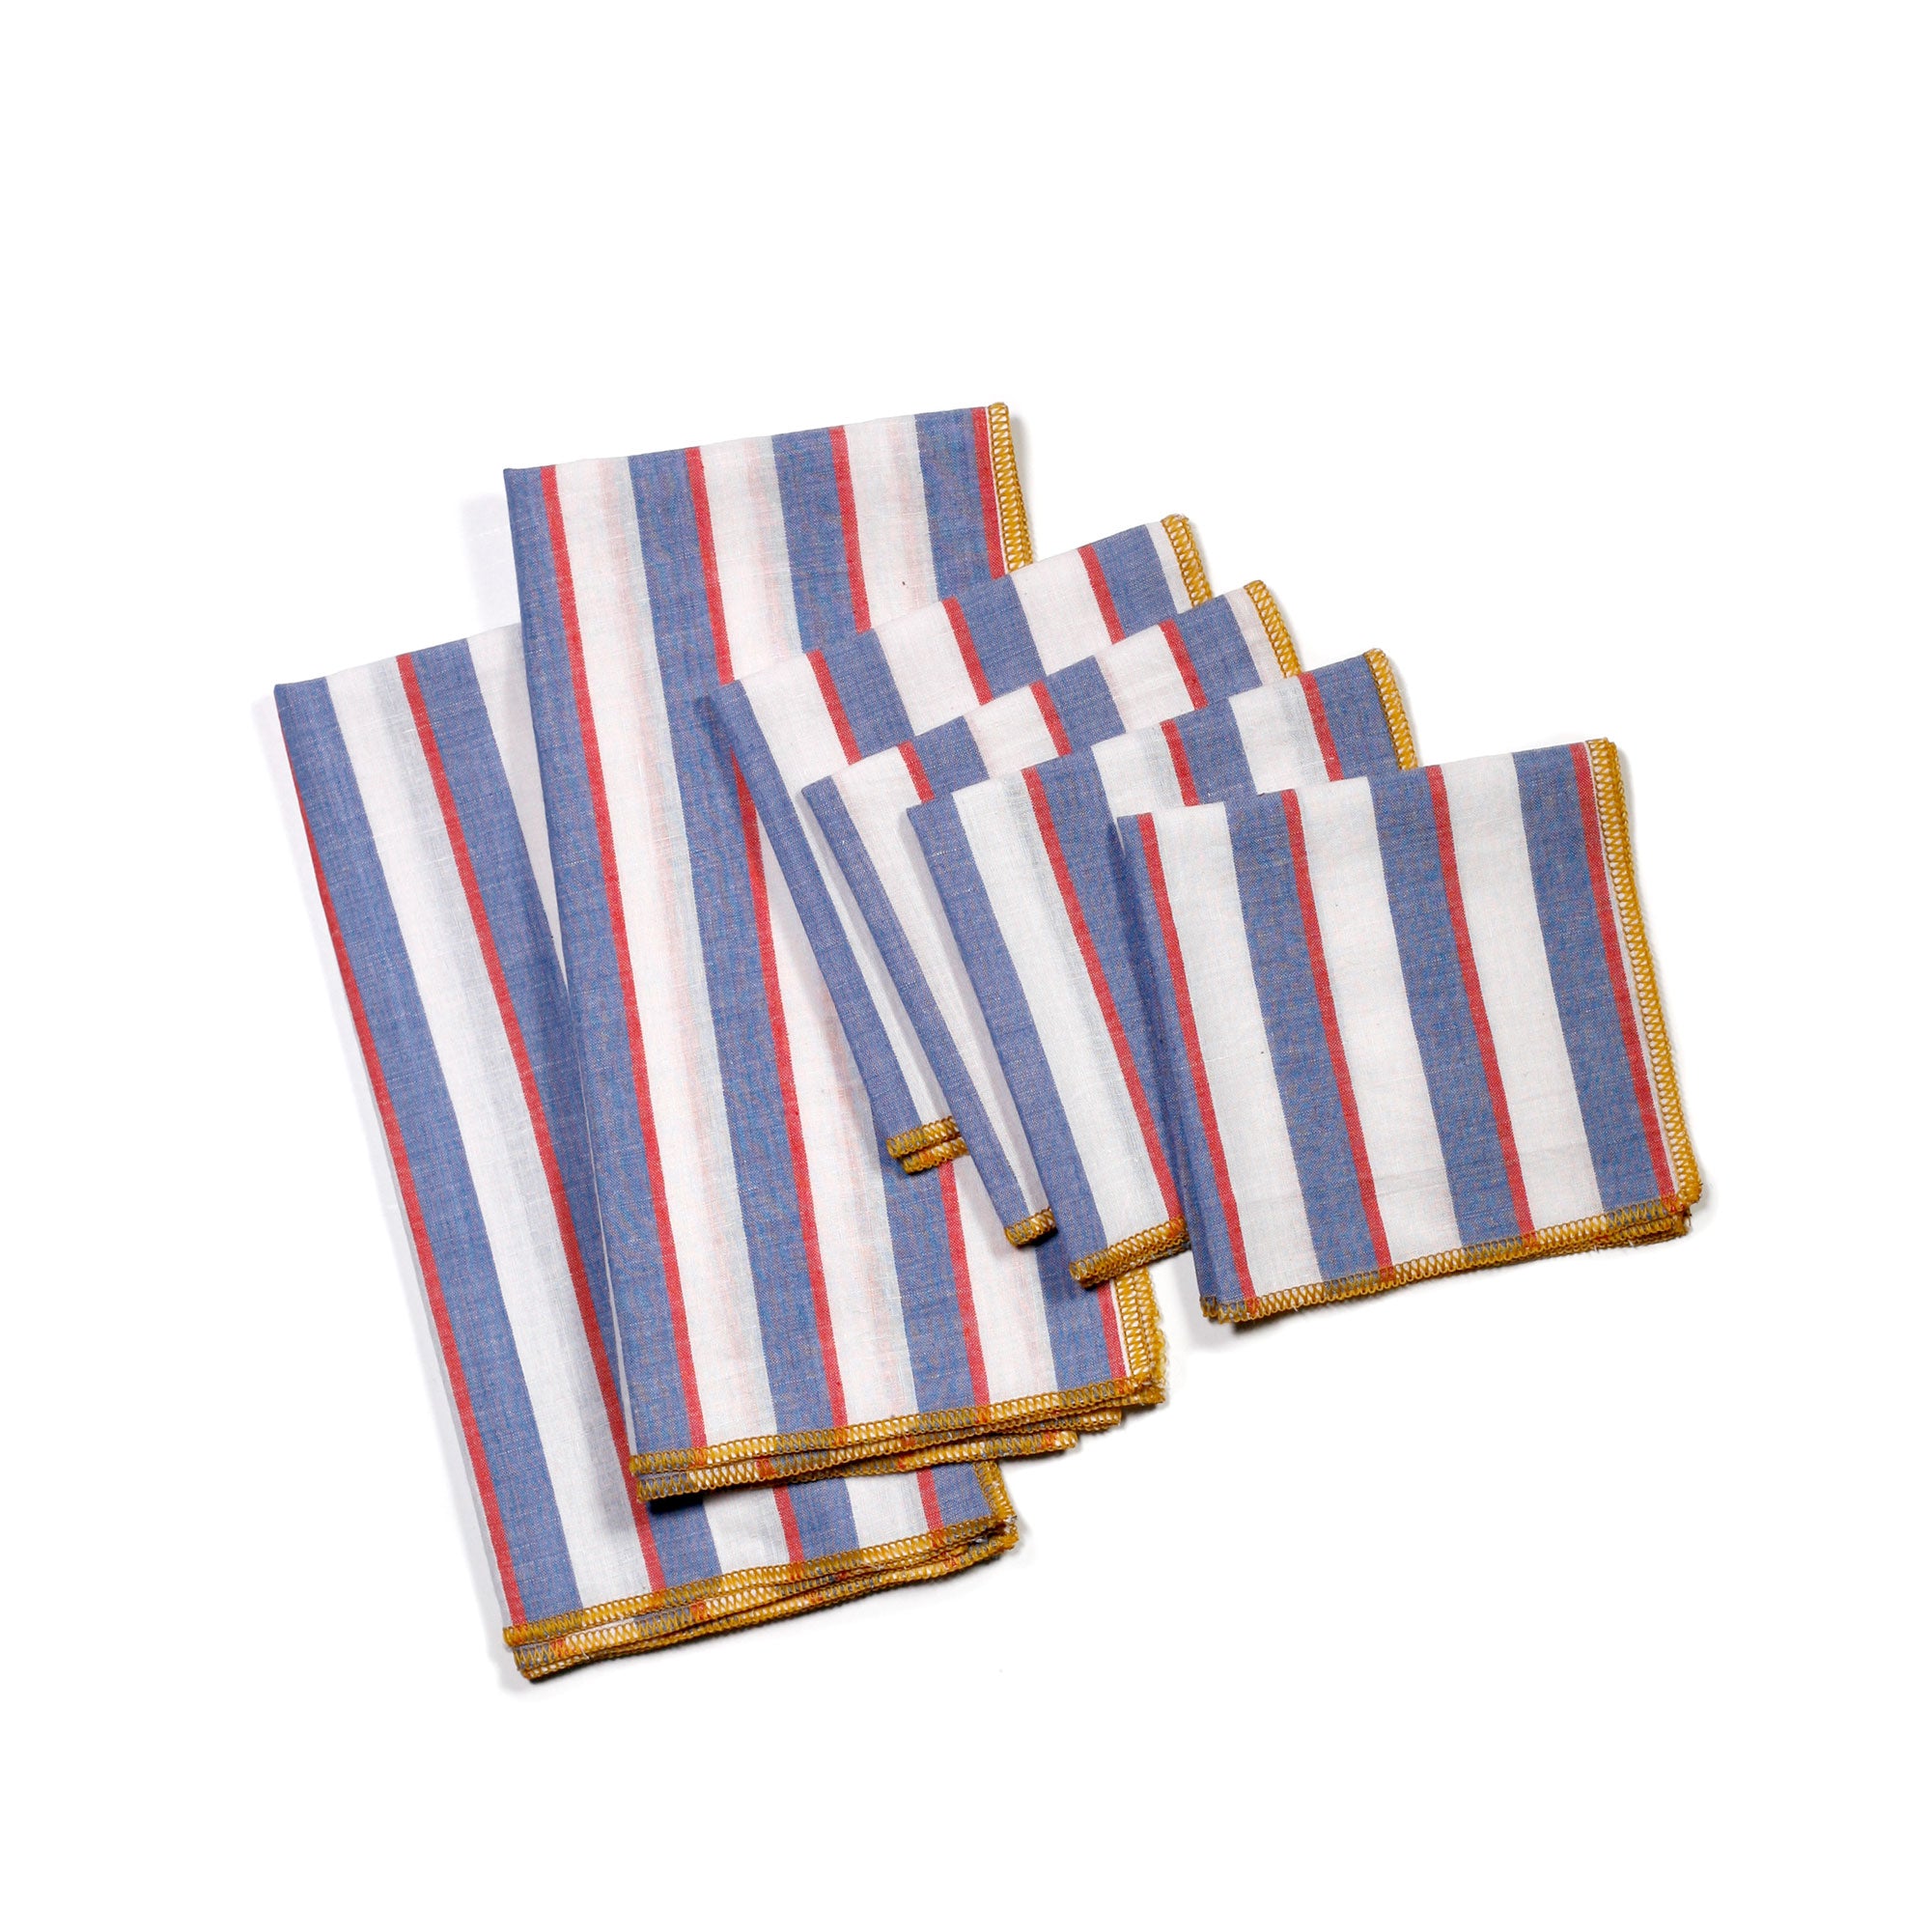 Mondrian Primary Colors Striped Dinner Napkins, Set of 2